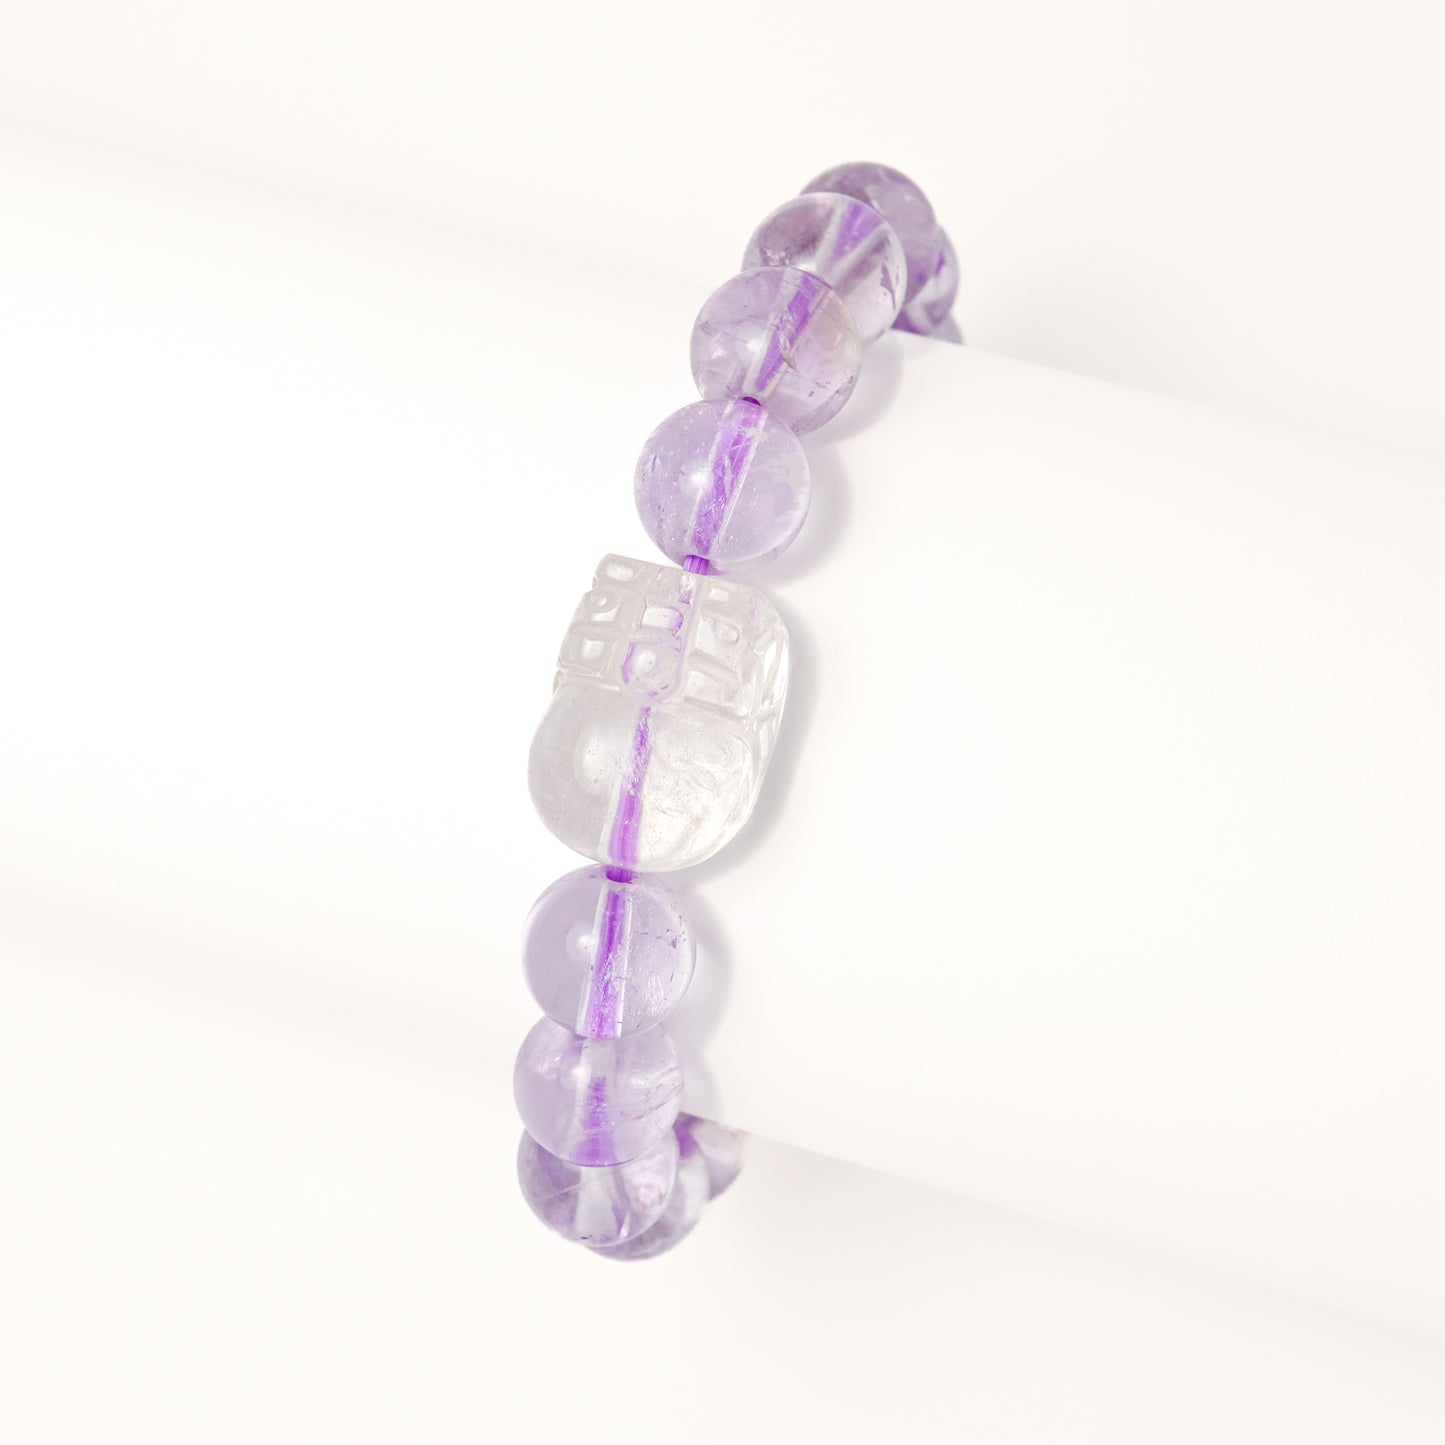 First Spring - Clear Quartz Pixiu & Lavender Amethyst Bracelet